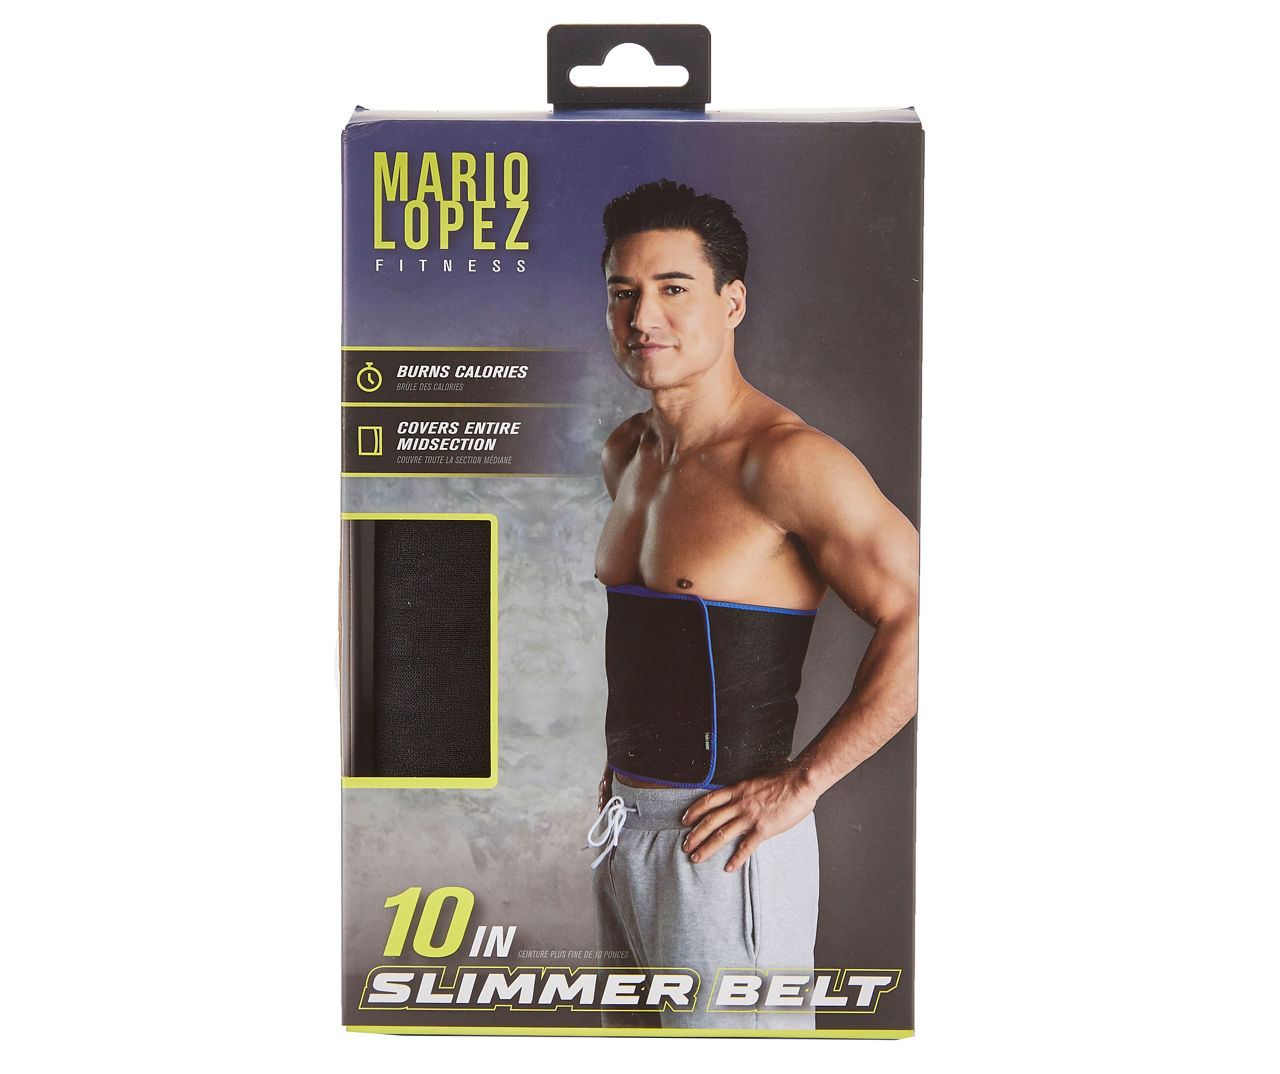 Mario Lopez Fitness 10 Slimmer Belt